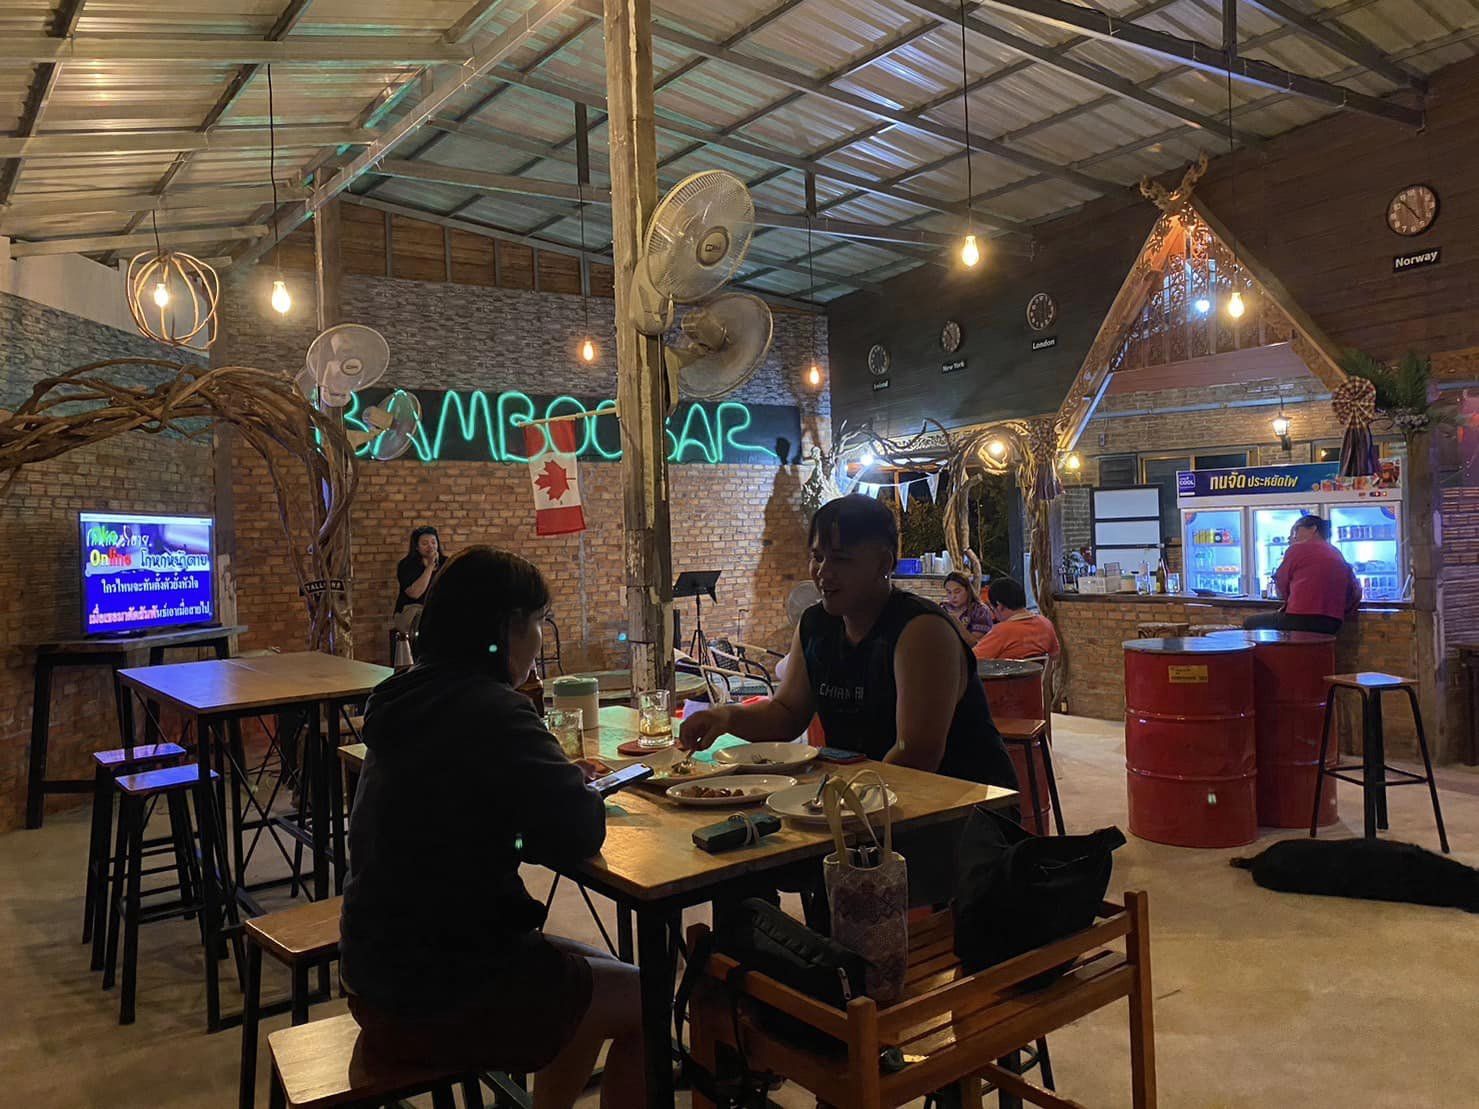 Bamboo bar & คาเฟ่พบพลอย (Bamboo bar & คาเฟ่พบพลอย) : Sakon Nakhon (สกลนคร)